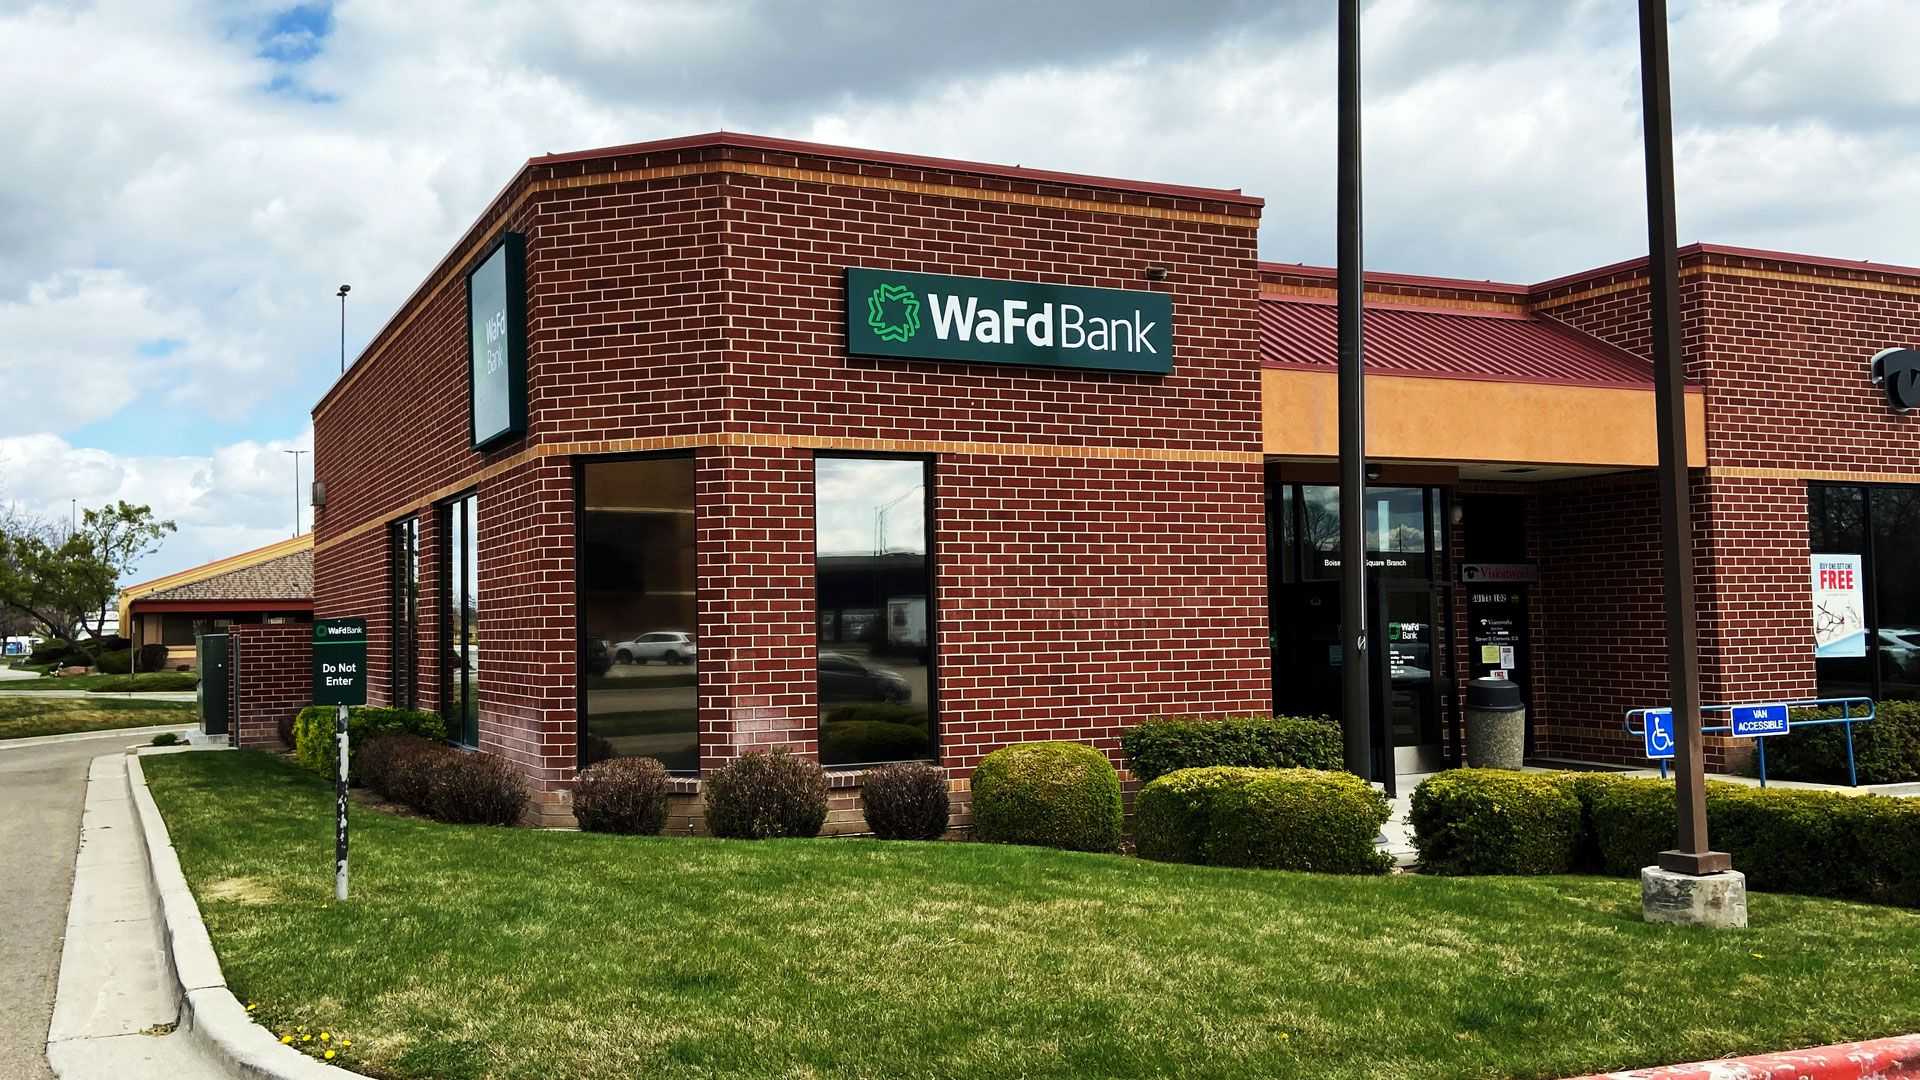 WaFd Bank in Boise, Idaho #1298 - Washington Federal.